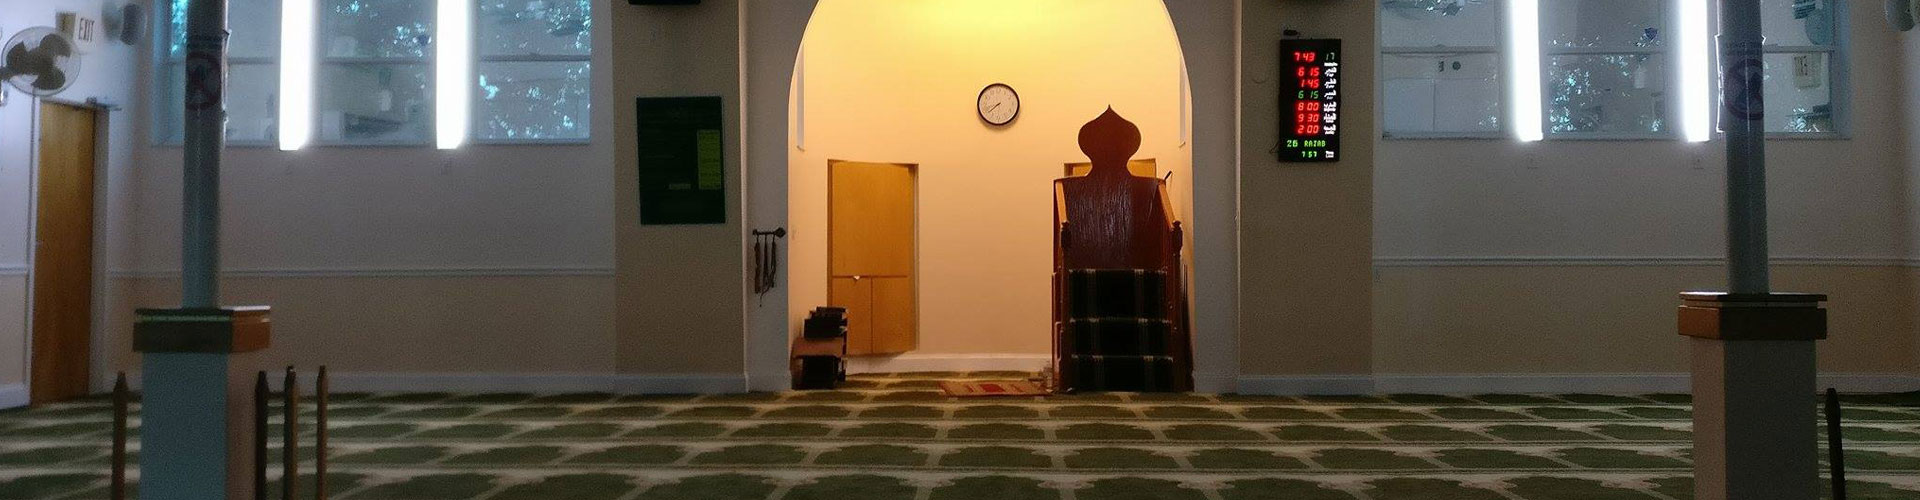 Masjid taqwa - Islamic Center of Osceola County Kissimmee